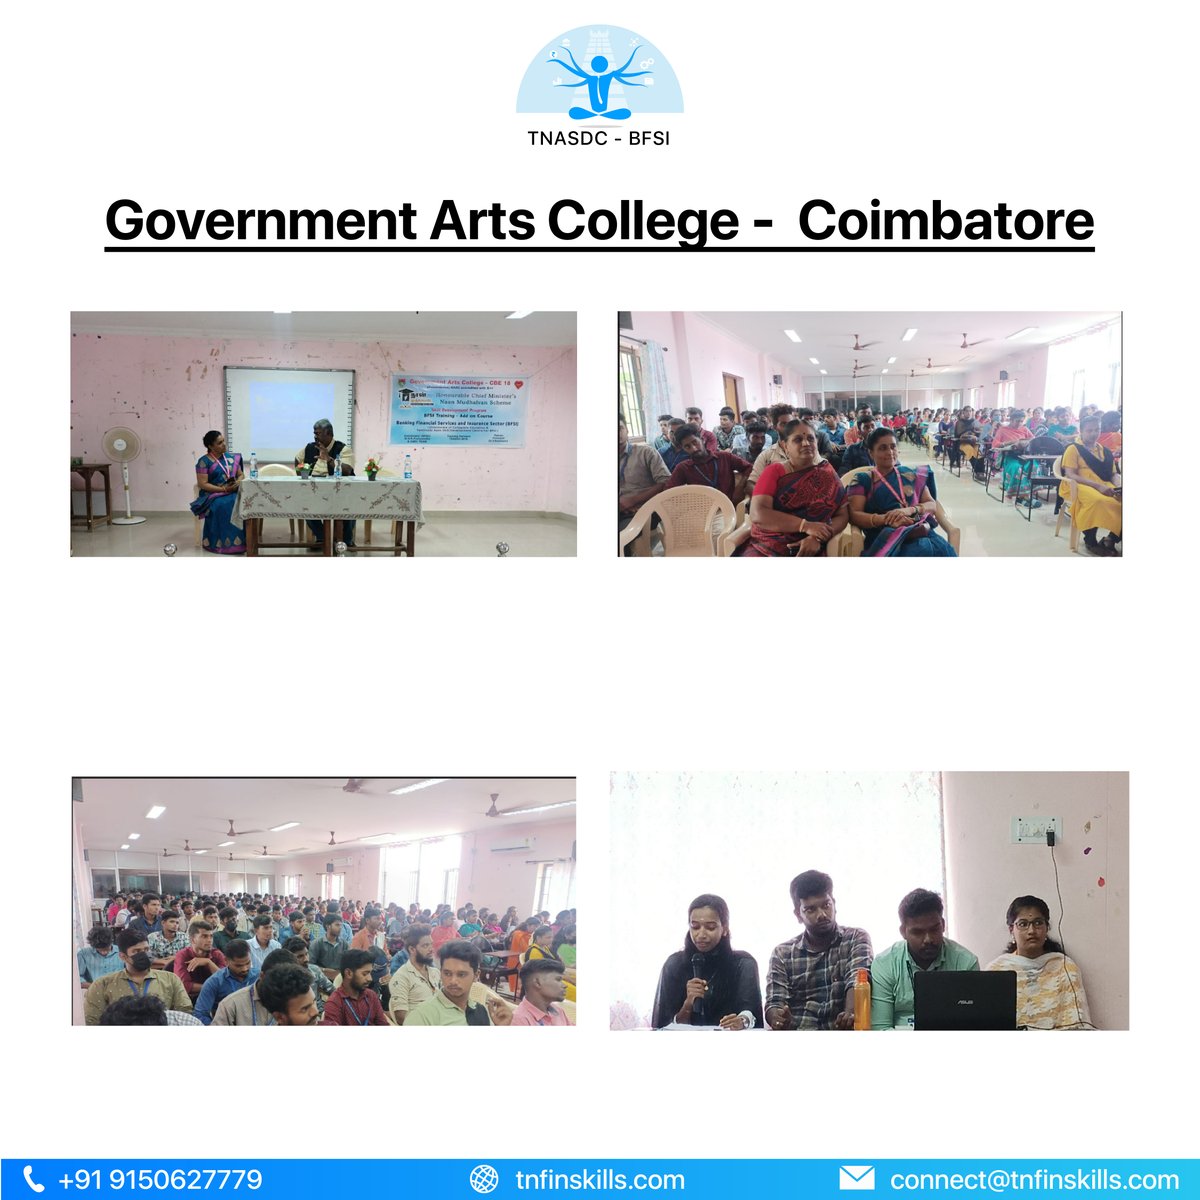 TNASDC BFSI orientation and enrollment program conducted at Govt Arts College - Coimbatore, under the 'Naan Mudhalvan' scheme. 

#governmentartsandsciencecollege #coimbatore #tnasdcbfsi #tnsdc #naanmudhalvan